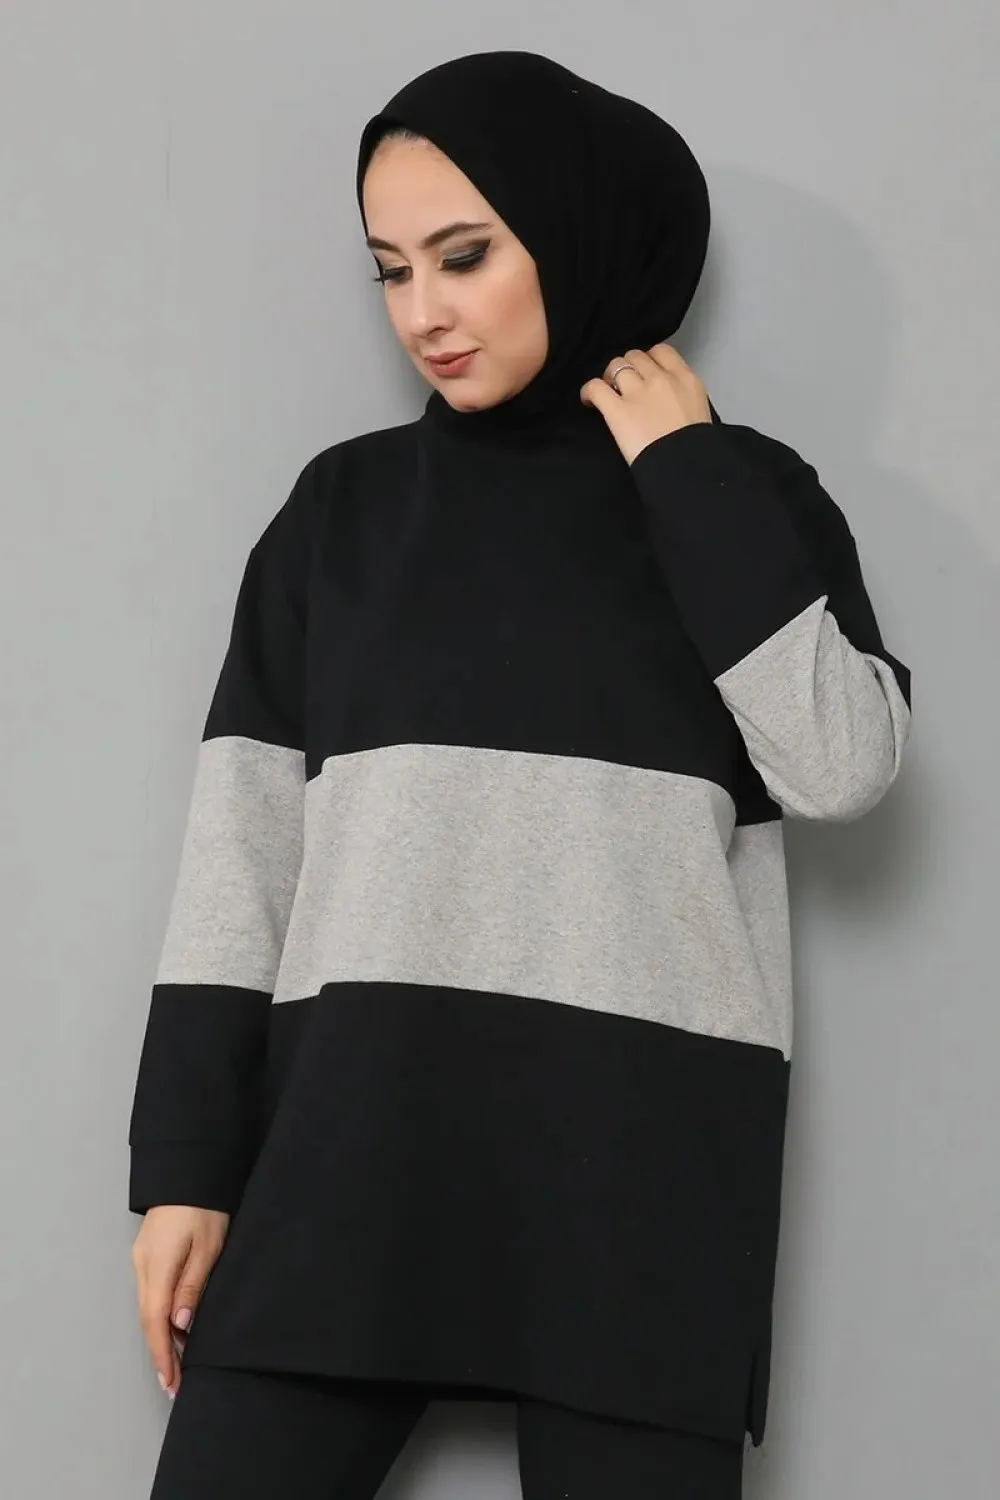 Hooded 2 Pieces Sports Women’s Set, Shirt and Pant Double Suit Plus Size Islamic Fashion Muslim Clothing Turkey Dubai 2021